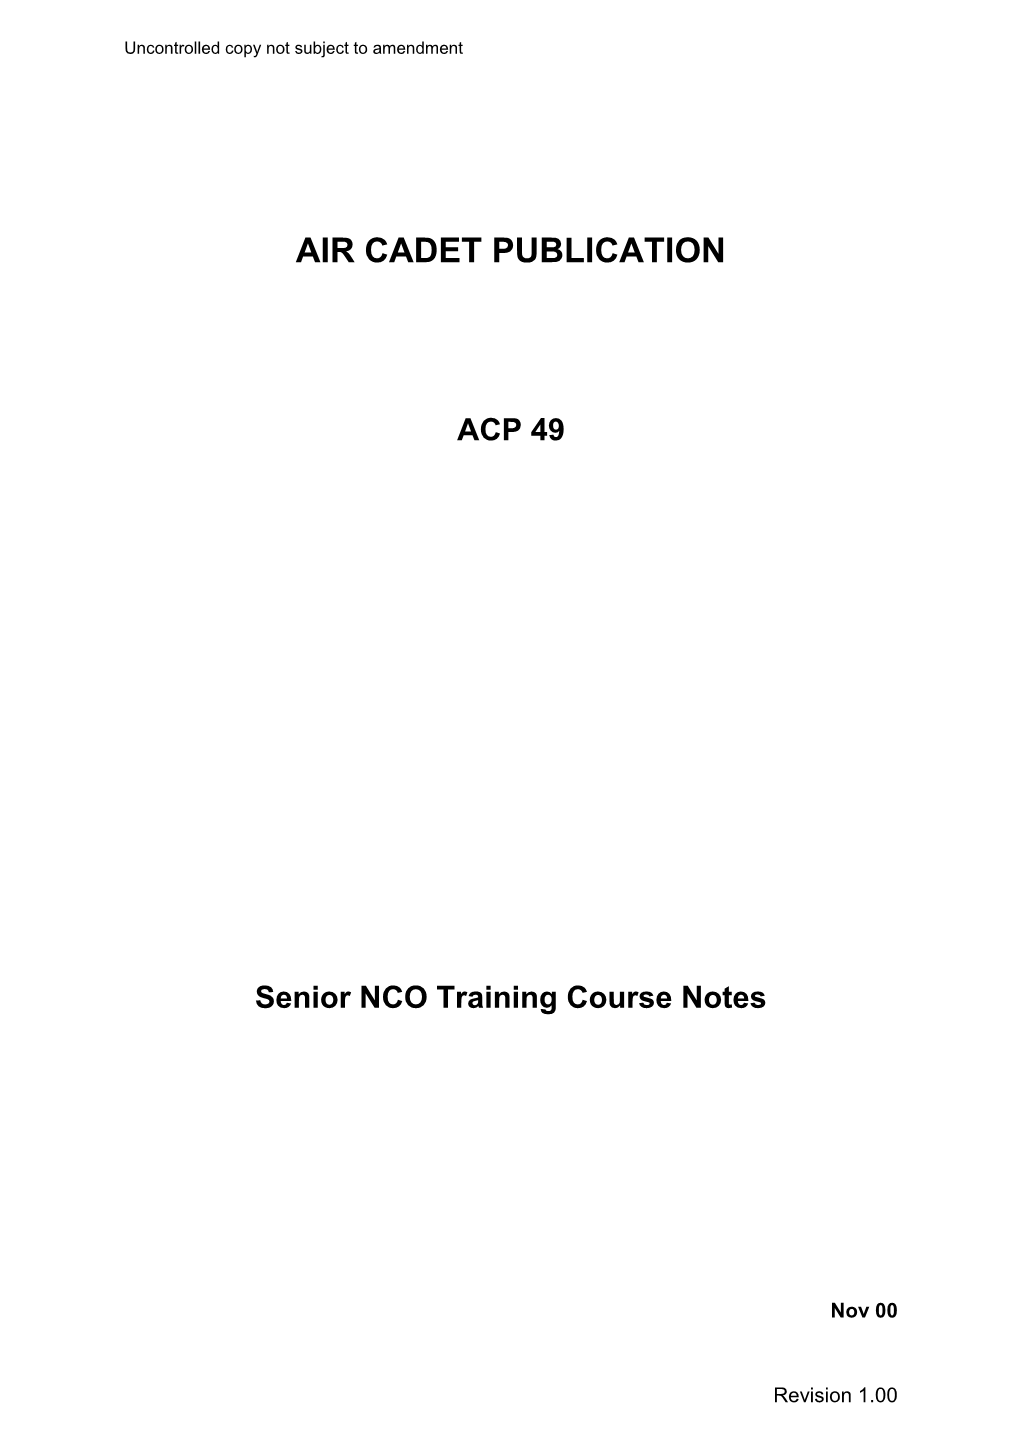 Senior NCO Training Course Notes